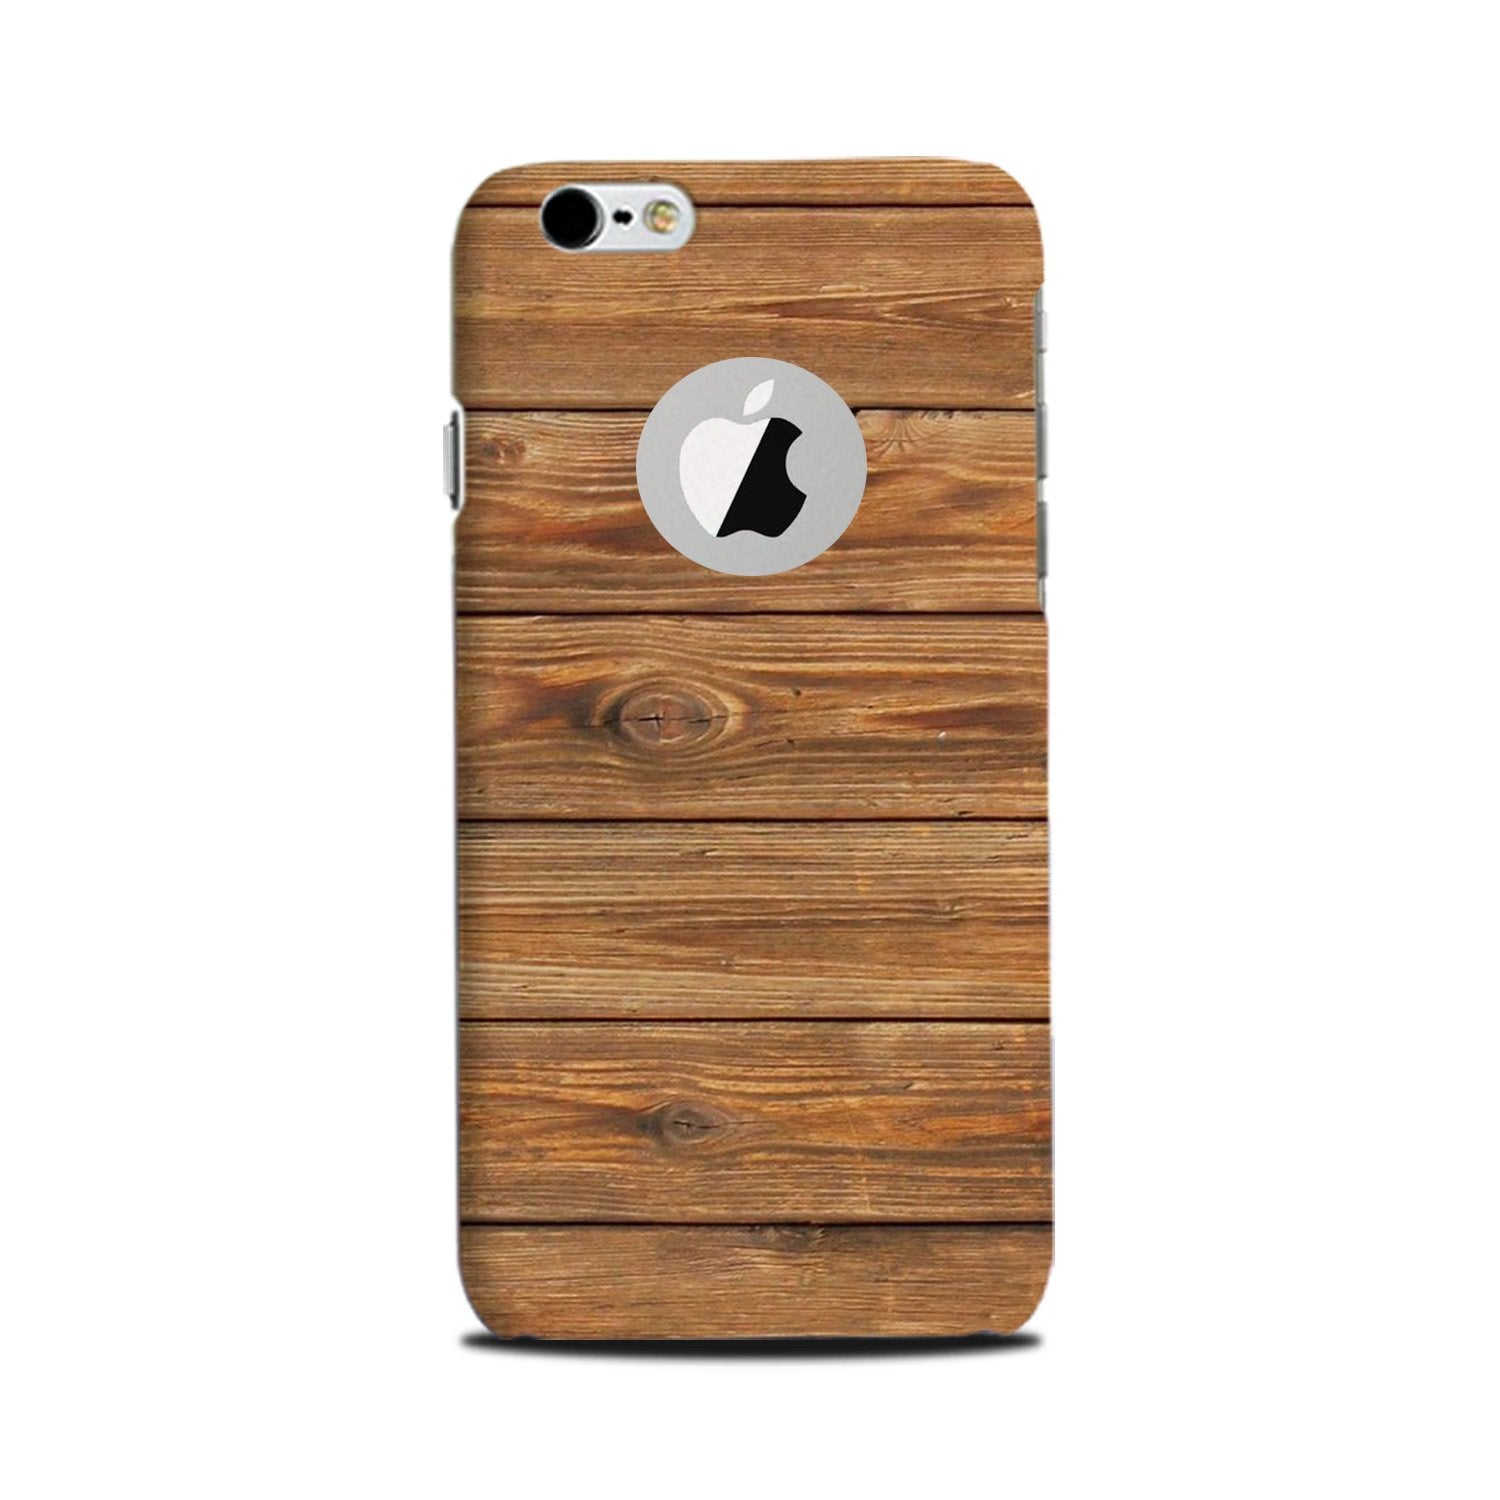 Wooden Look Case for iPhone 6 Plus / 6s Plus logo cut   (Design - 113)